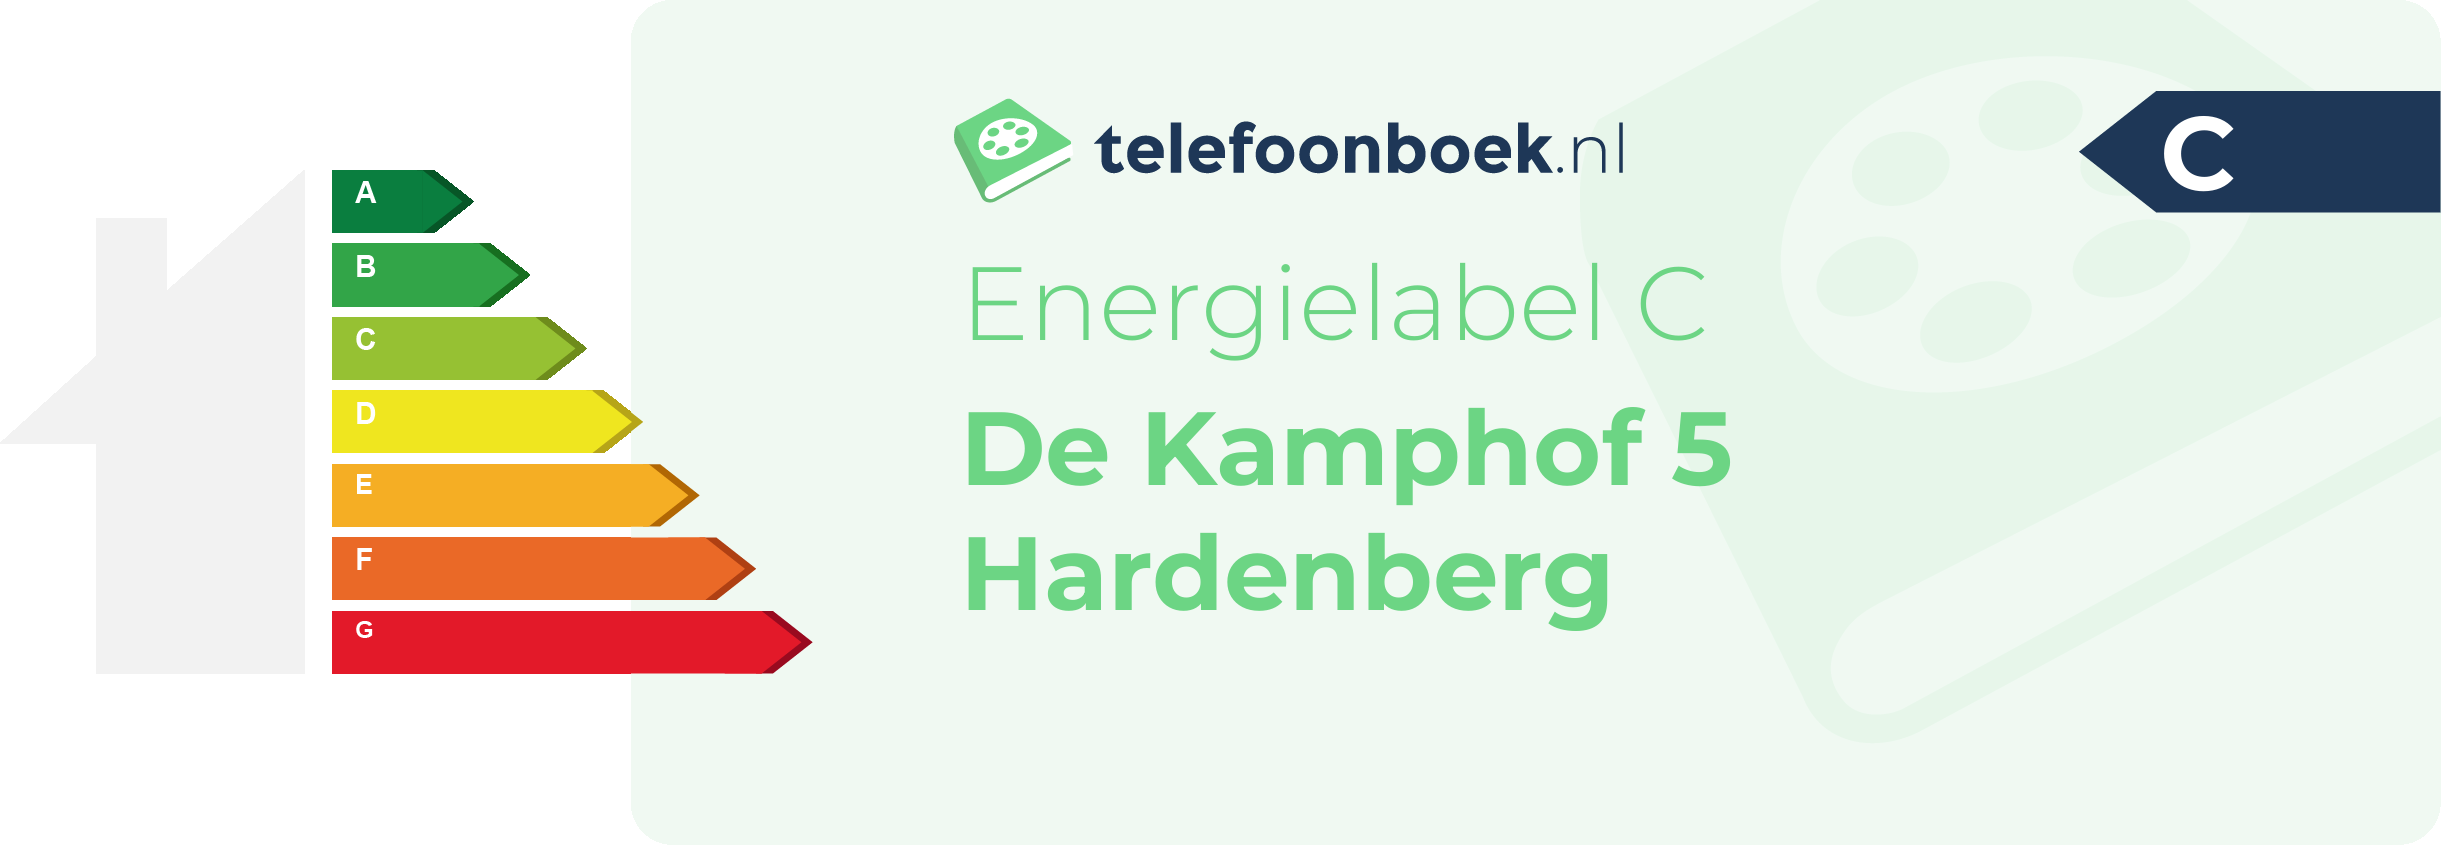 Energielabel De Kamphof 5 Hardenberg